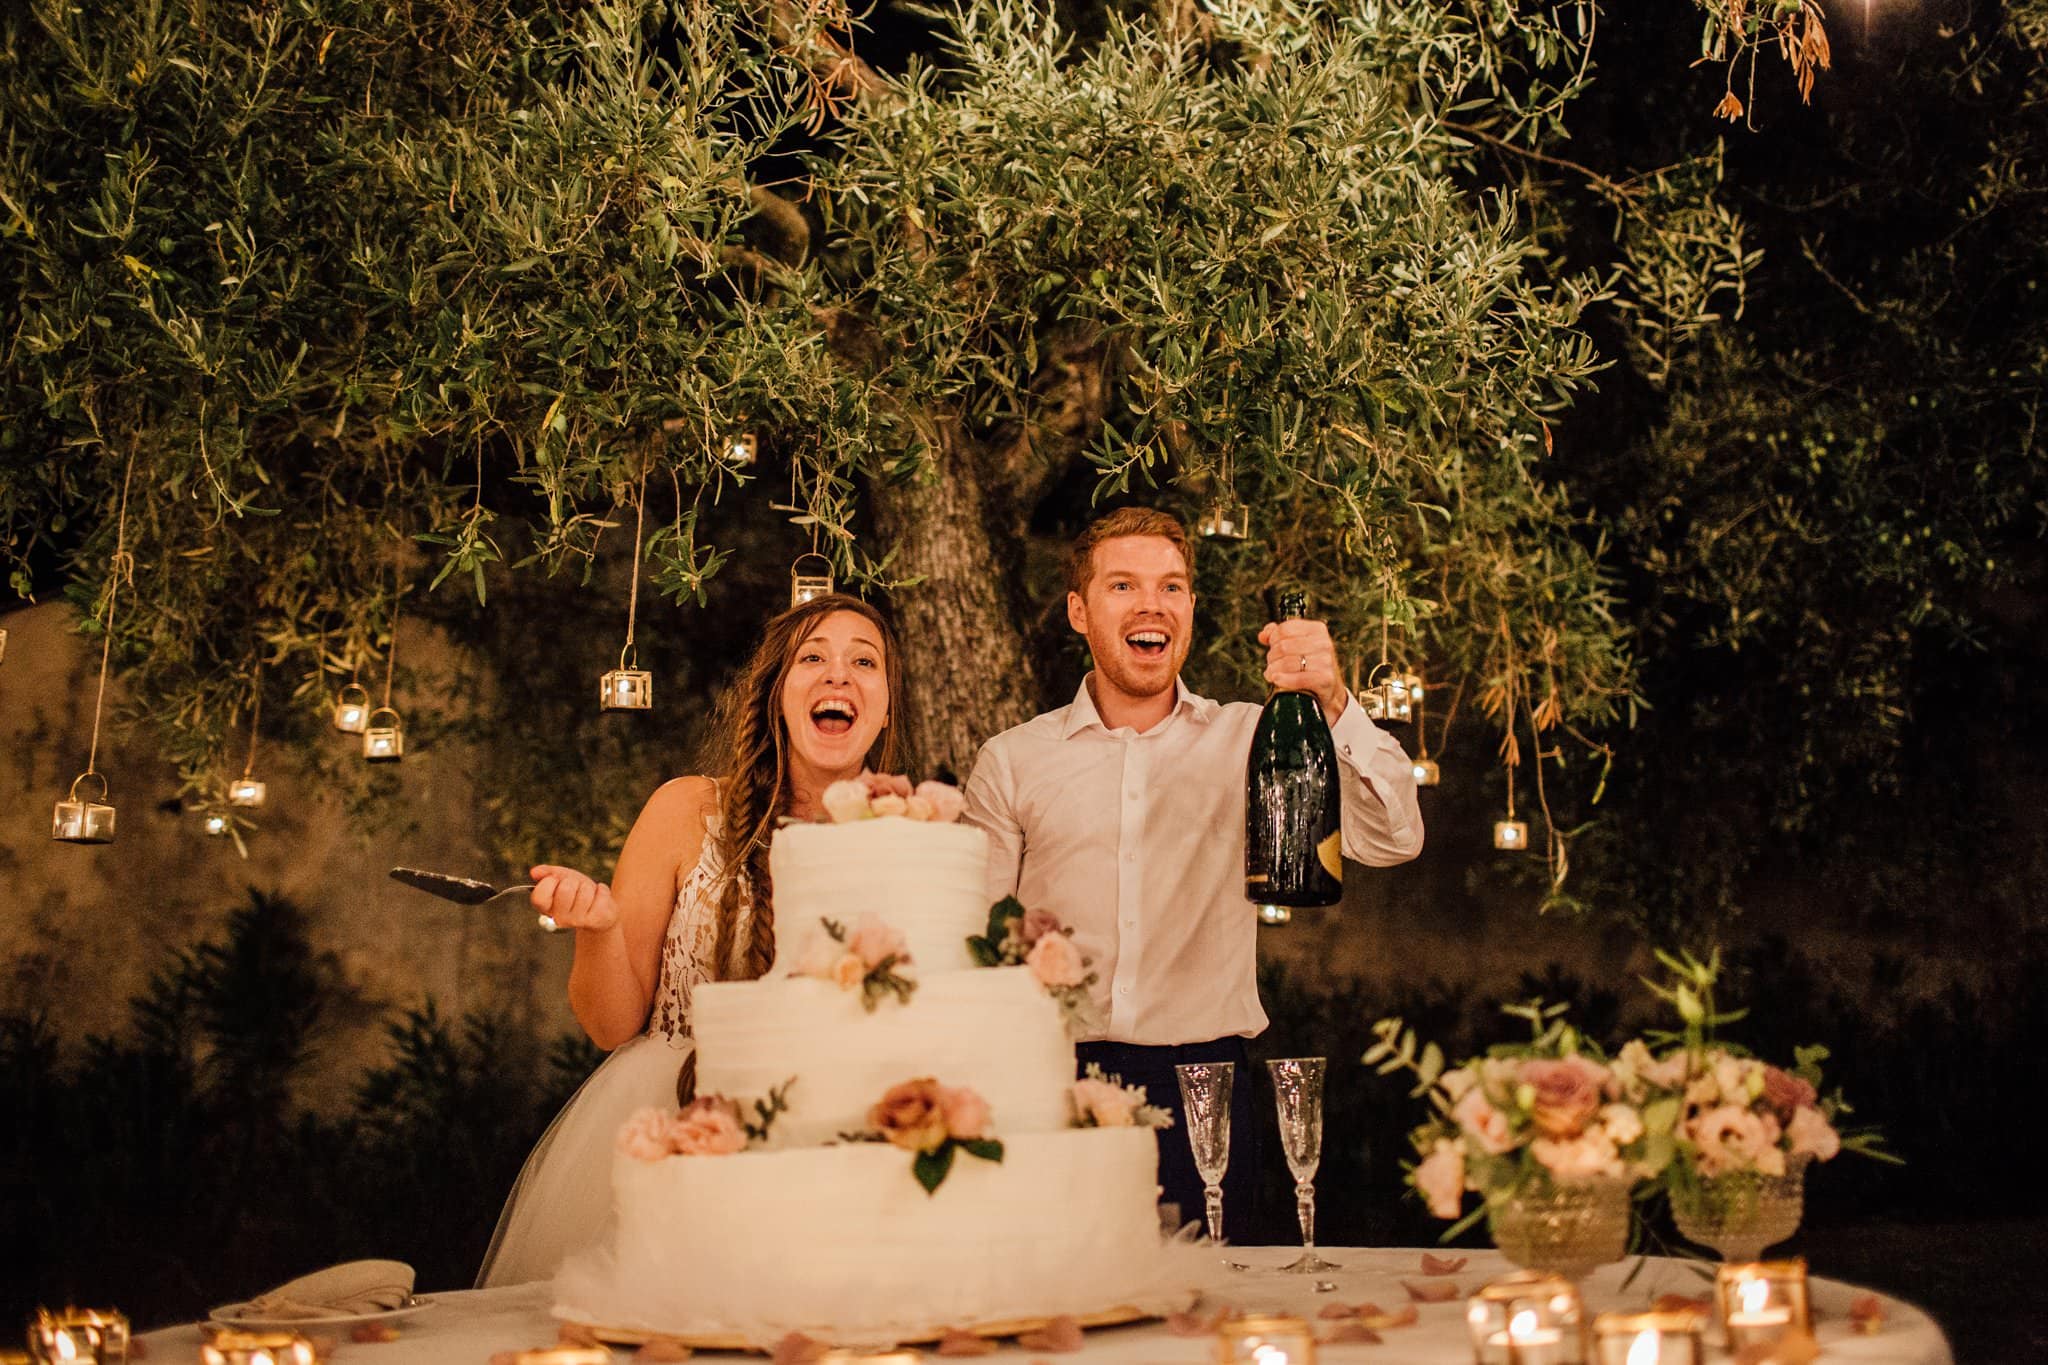 Italian wedding cake and champagne